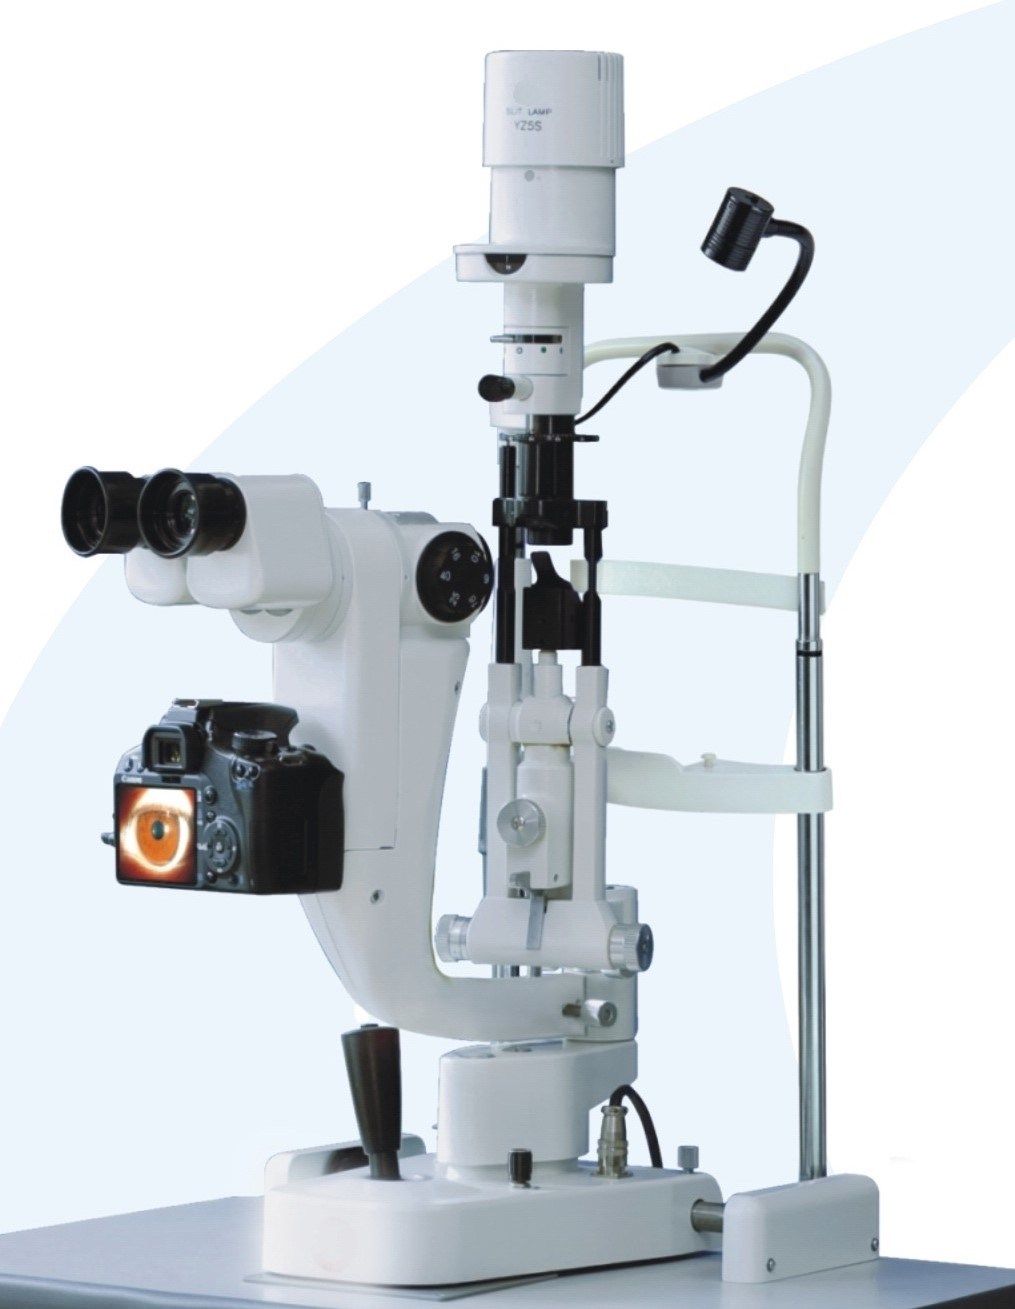 Digital Slit Lamp Microscope